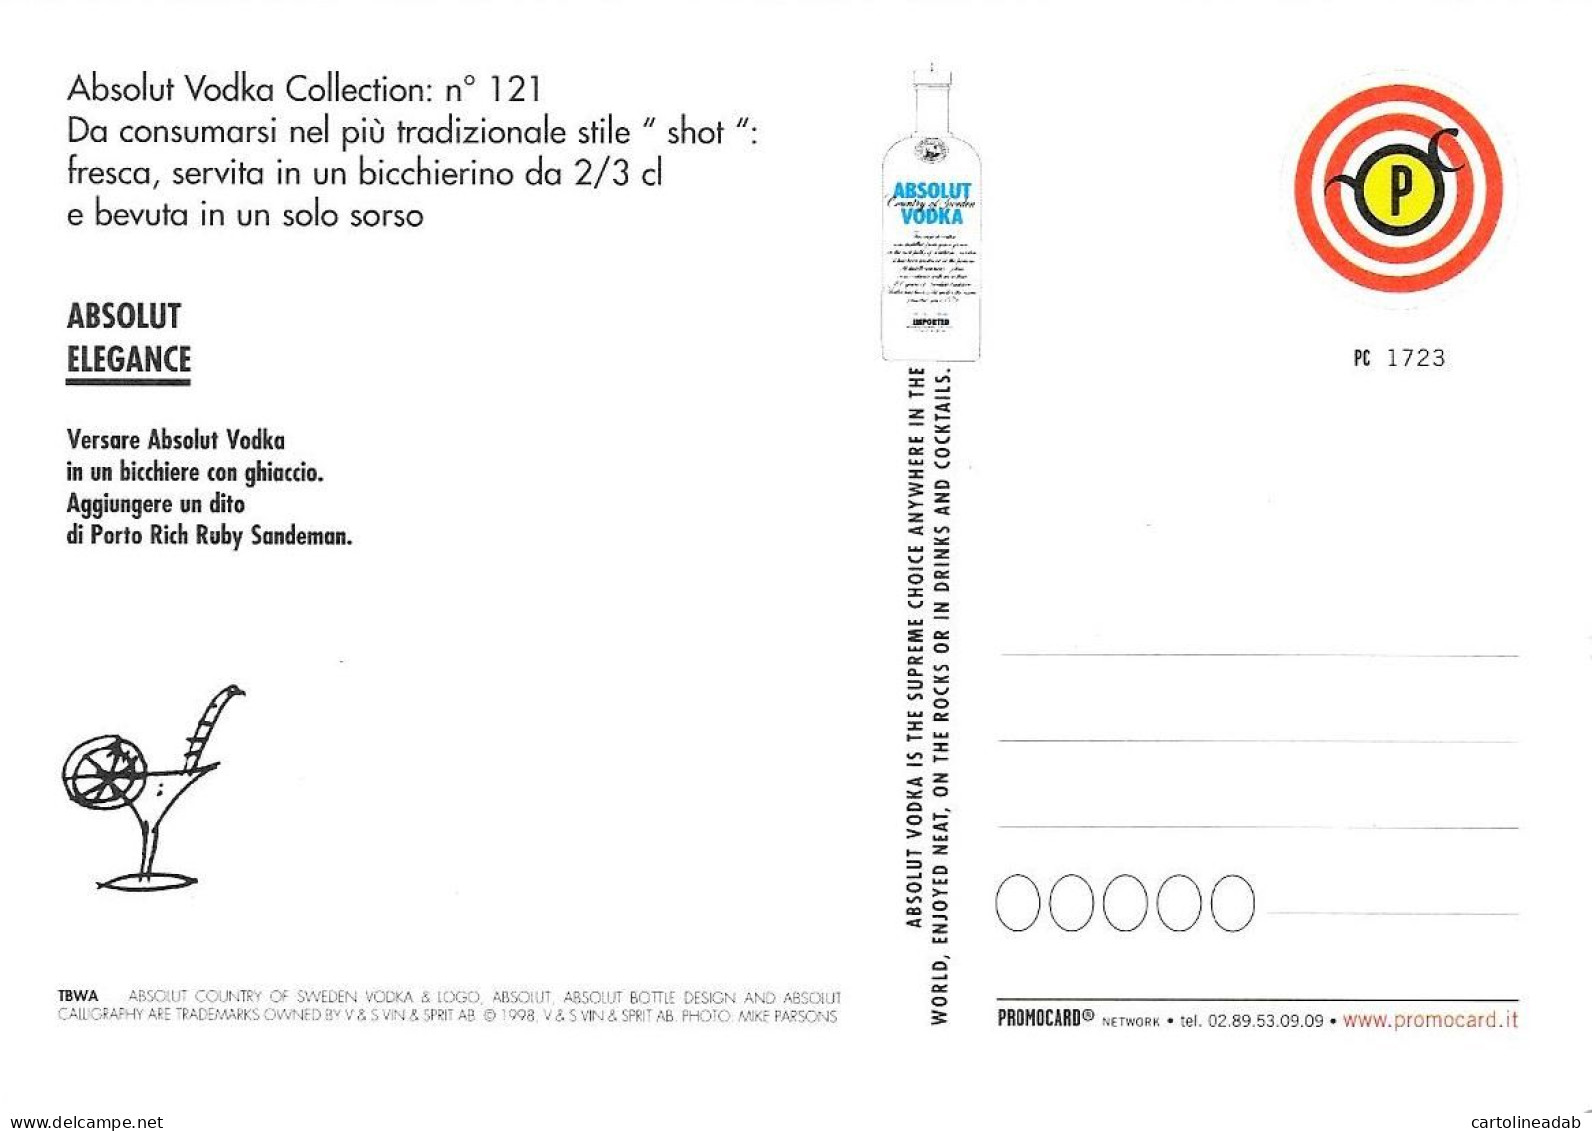 [MD9498] CPM - ABSOLUT VOYEUR - ABSOLUT VODKA COLLECTION 121 - PROMOCARD 1723 - PERFETTA - Non Viaggiata - Werbepostkarten